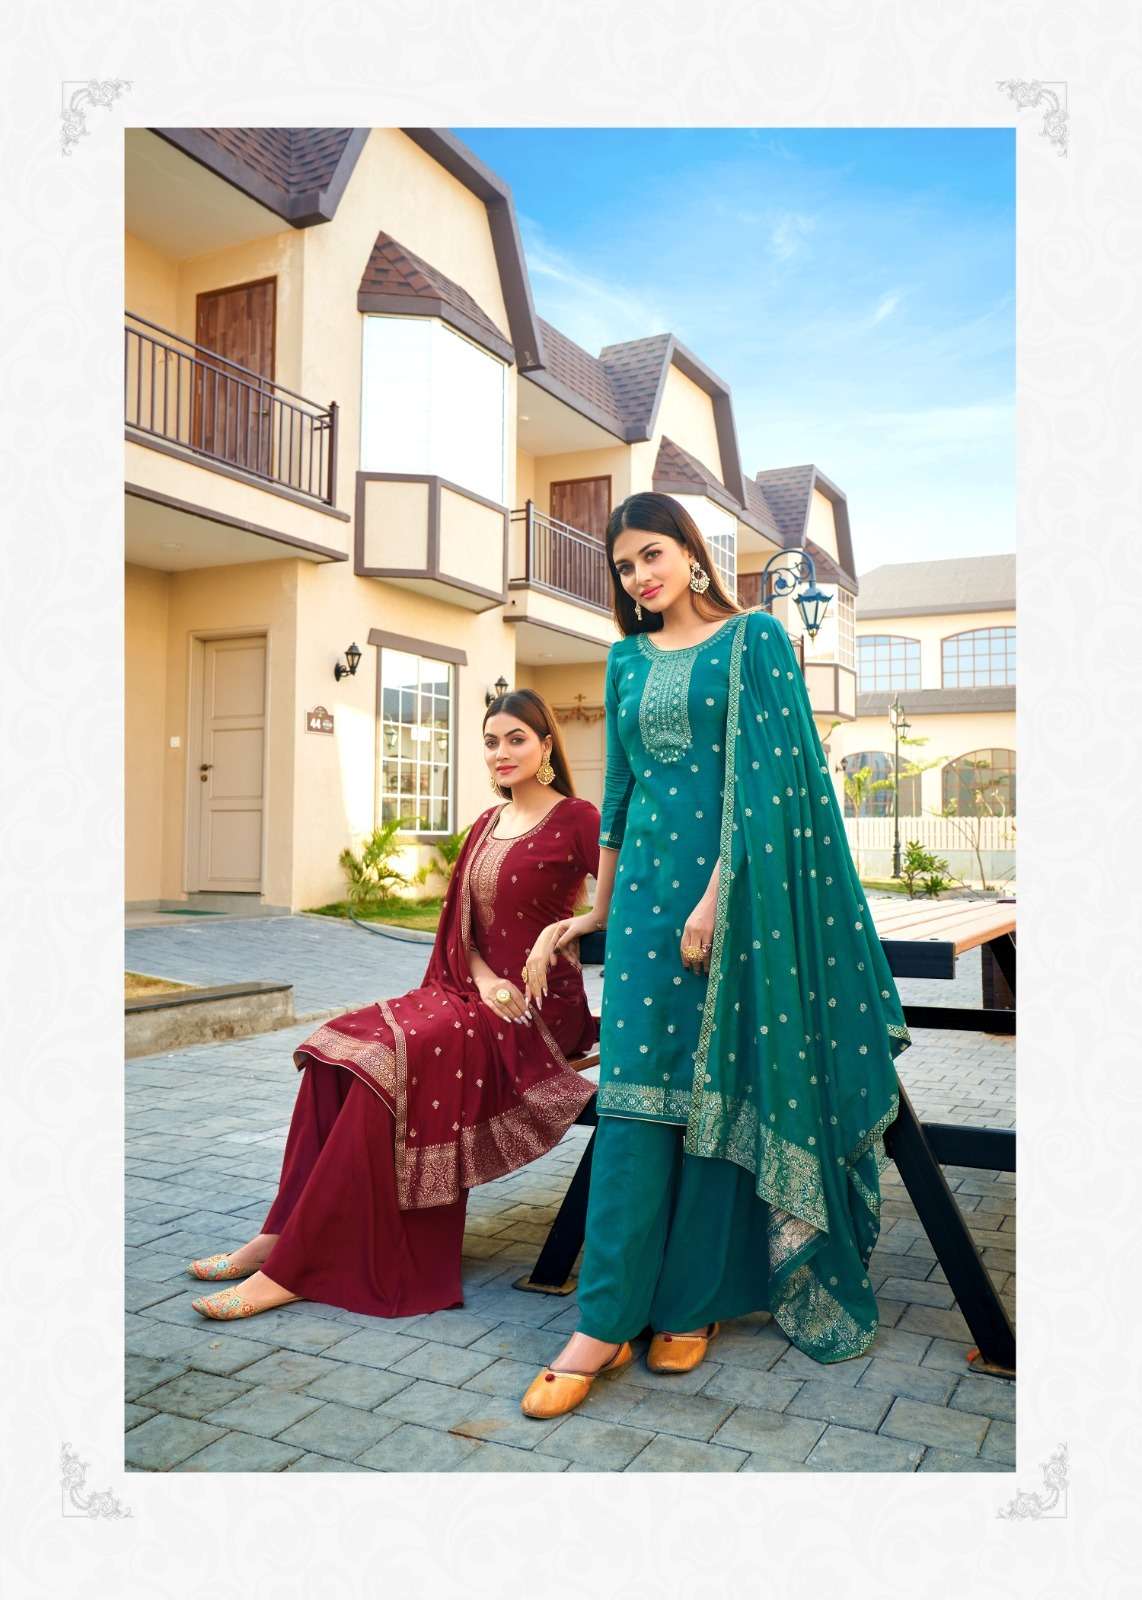 kalarang devanshi 10461-10466 series indian designer salwar kameez catalogue online dealer surat